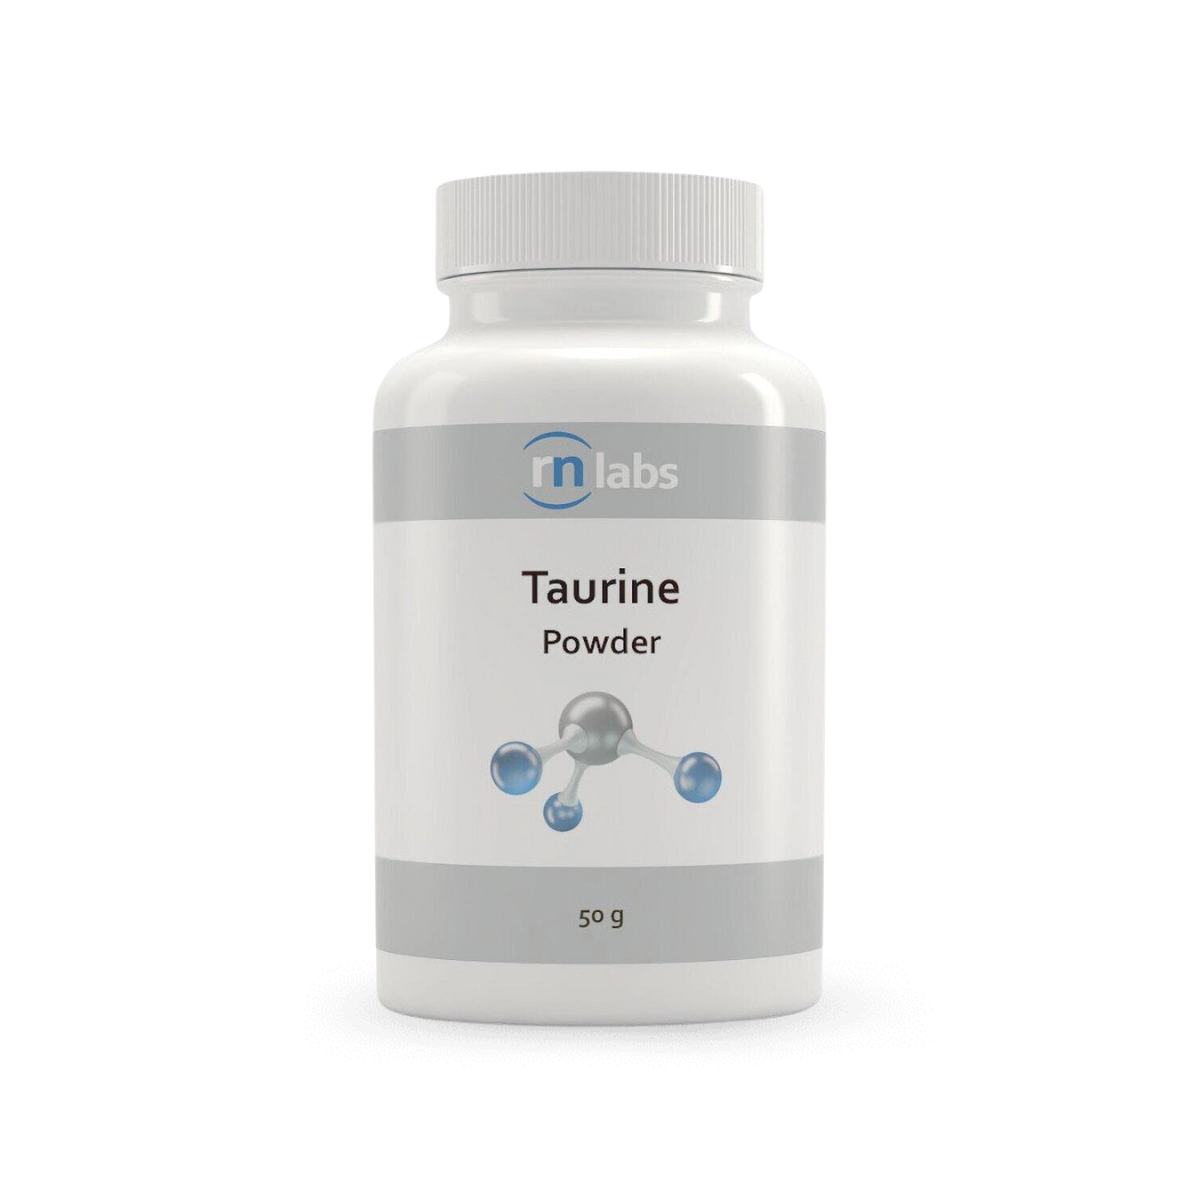 RN Labs Taurine Powder 50g